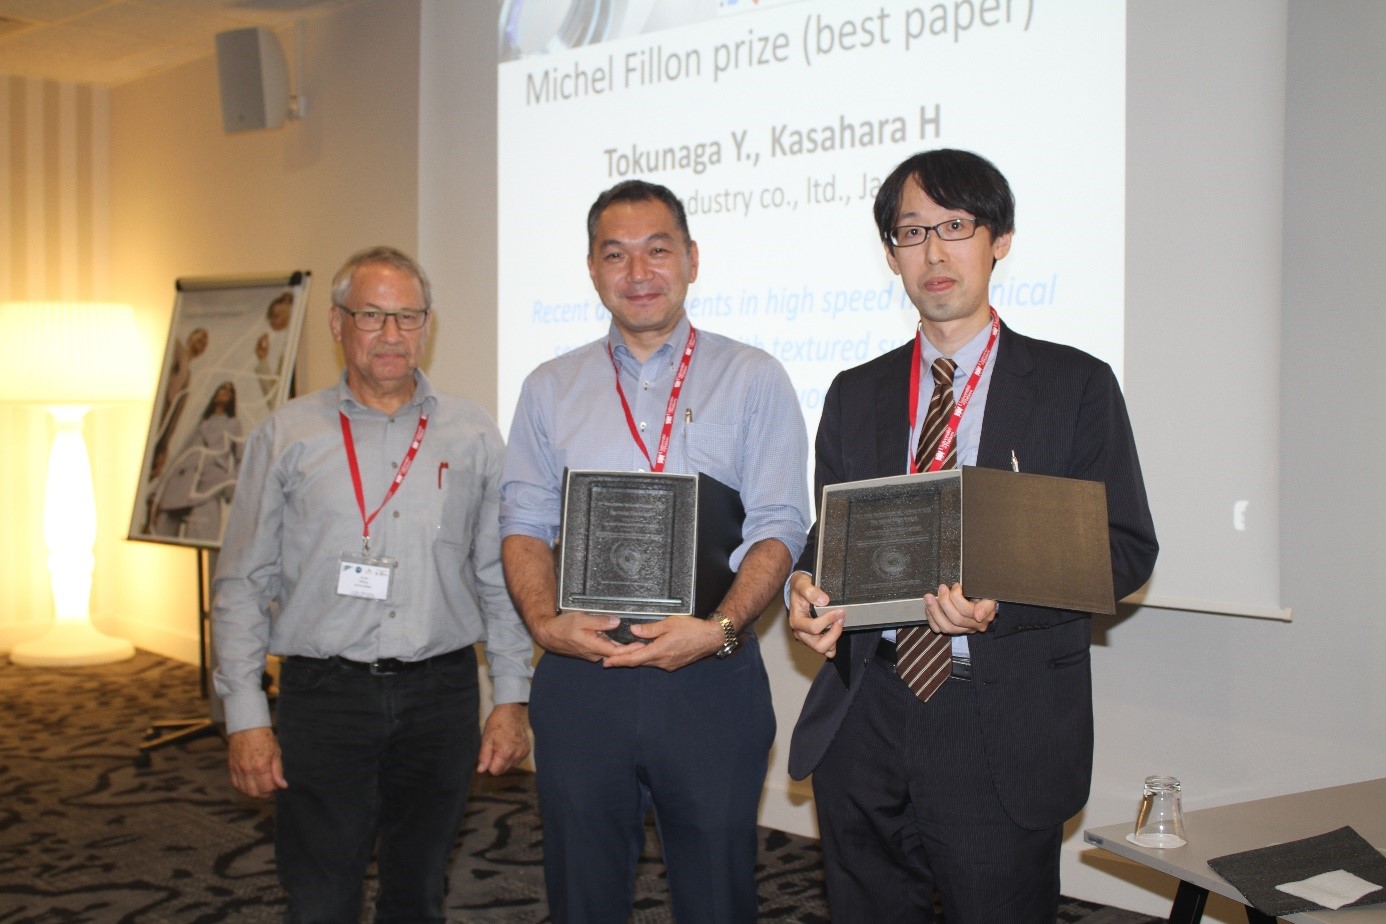 2022/11/21 21st Tribo-PPRIME Workshop 2022へのメカニカルシール技術論文投稿とMichel Fillon Prize（Best Paper）受賞のお知らせ